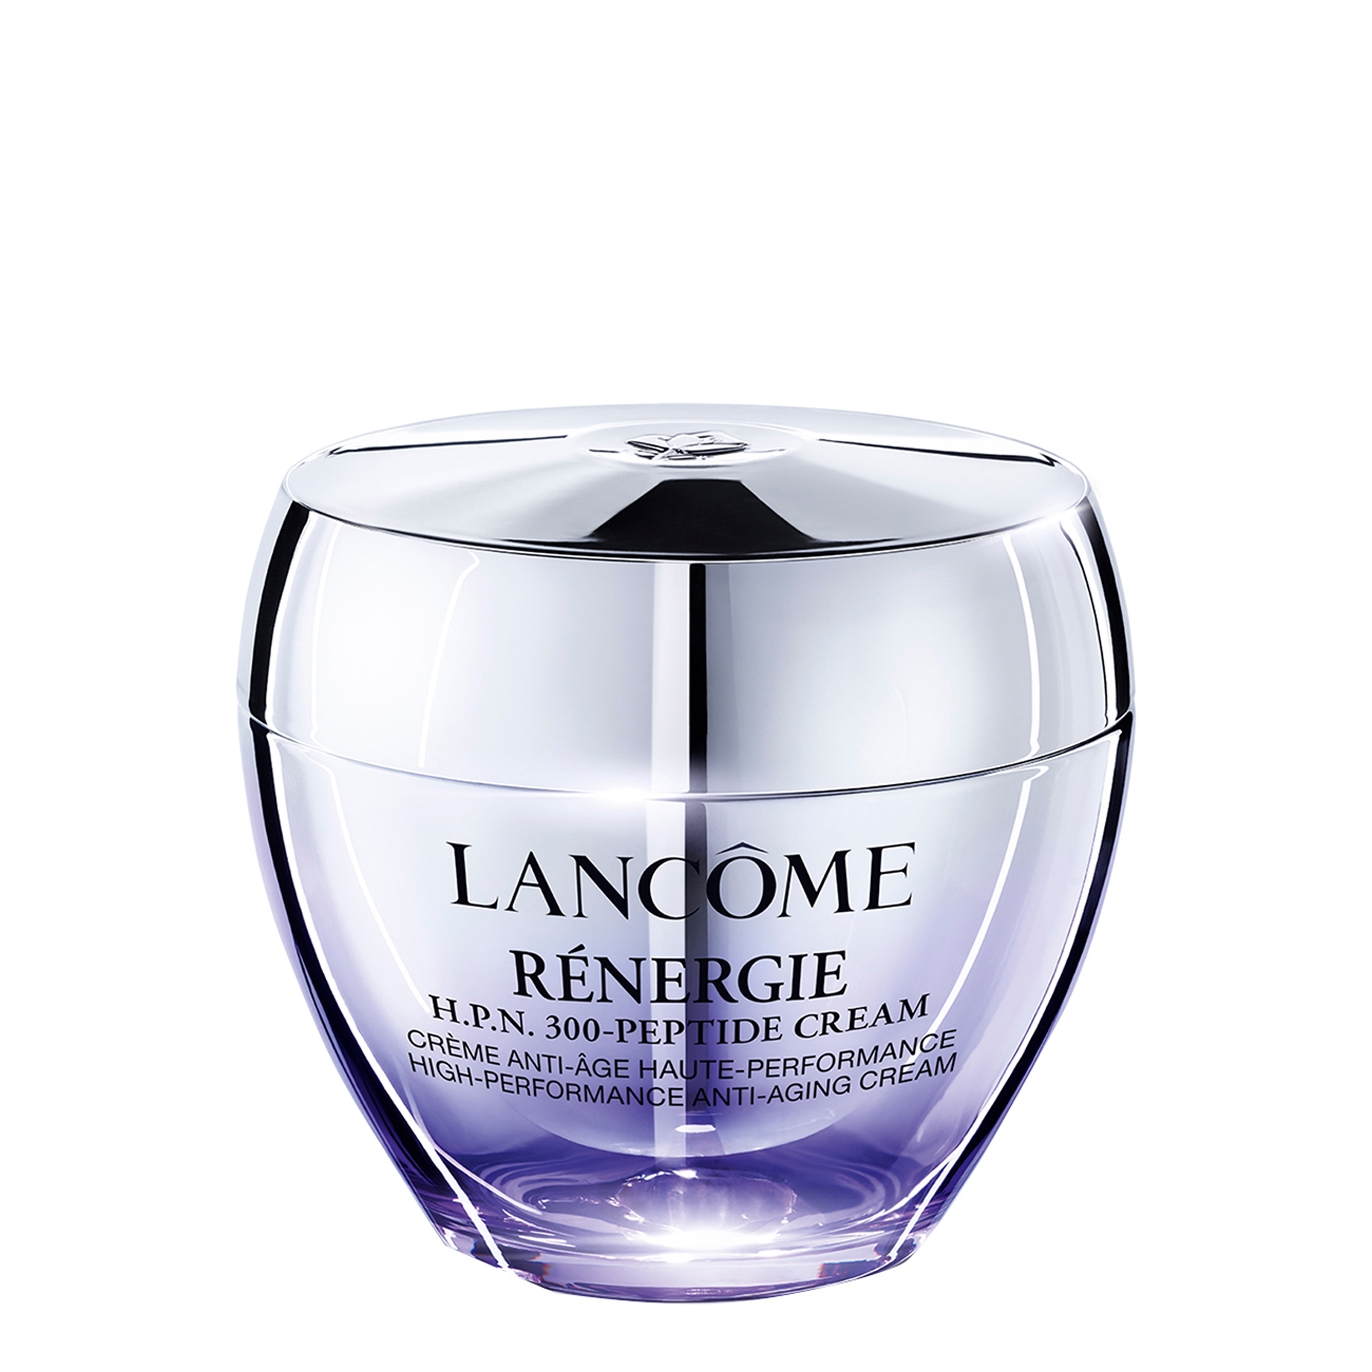 Lancôme Rénergie H. P.n. 300-peptide Face Cream (50ml)